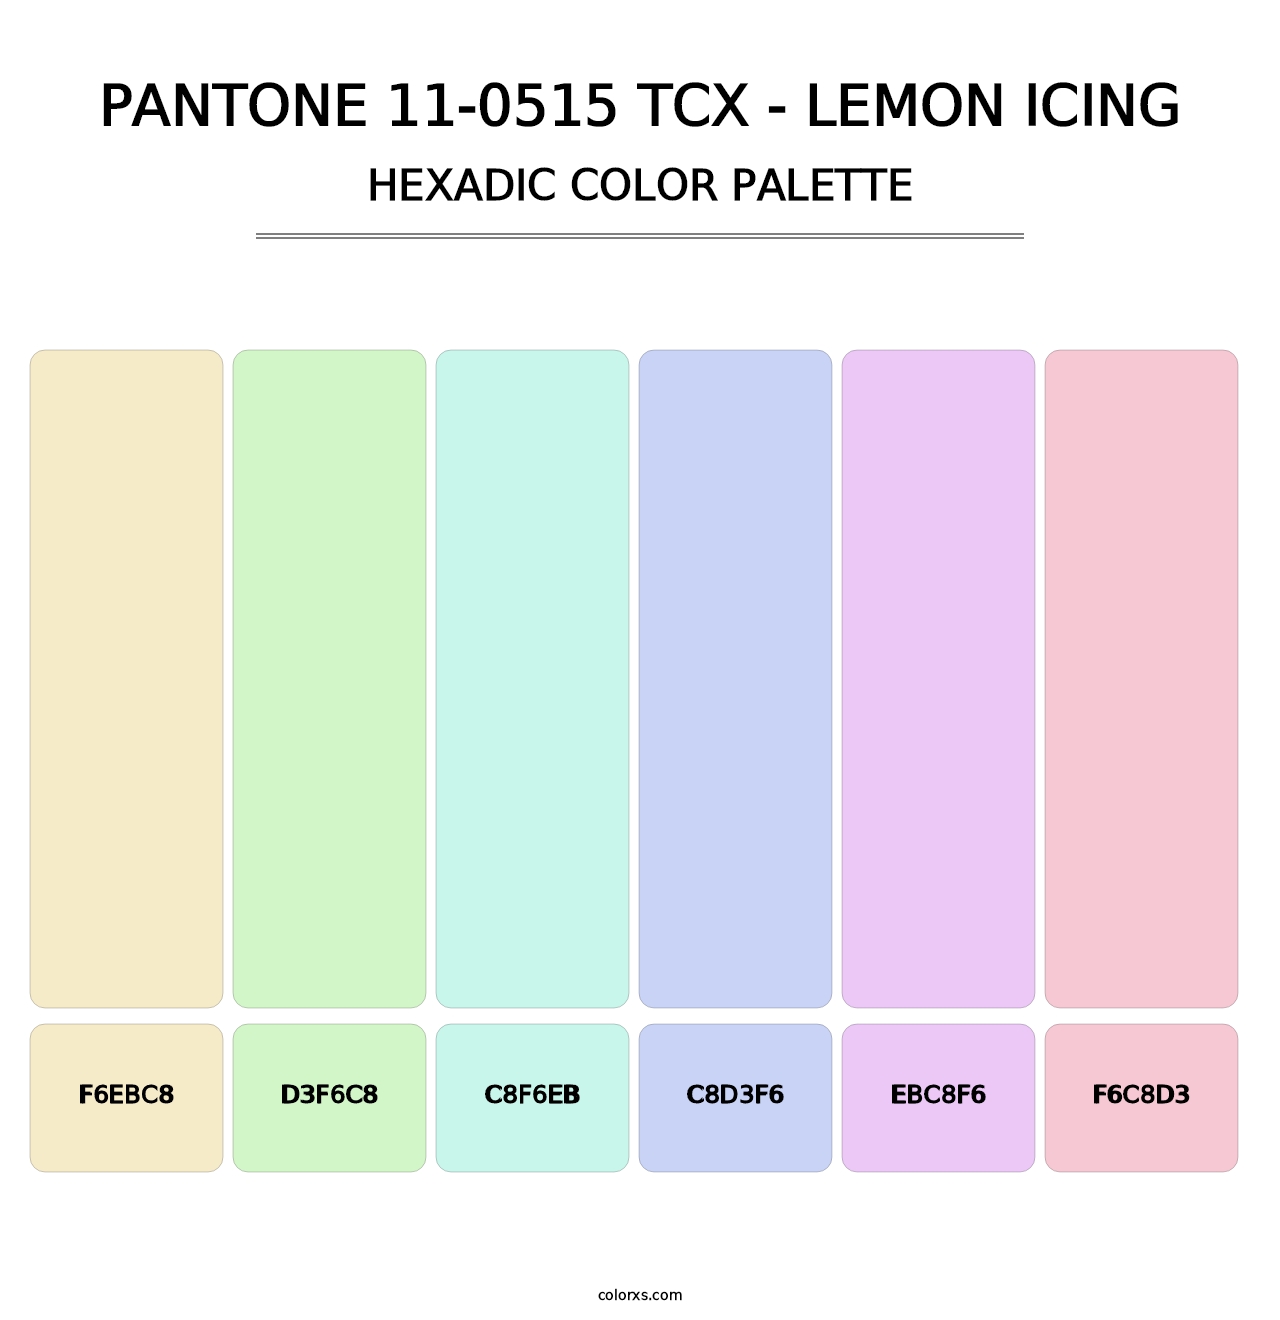 PANTONE 11-0515 TCX - Lemon Icing - Hexadic Color Palette